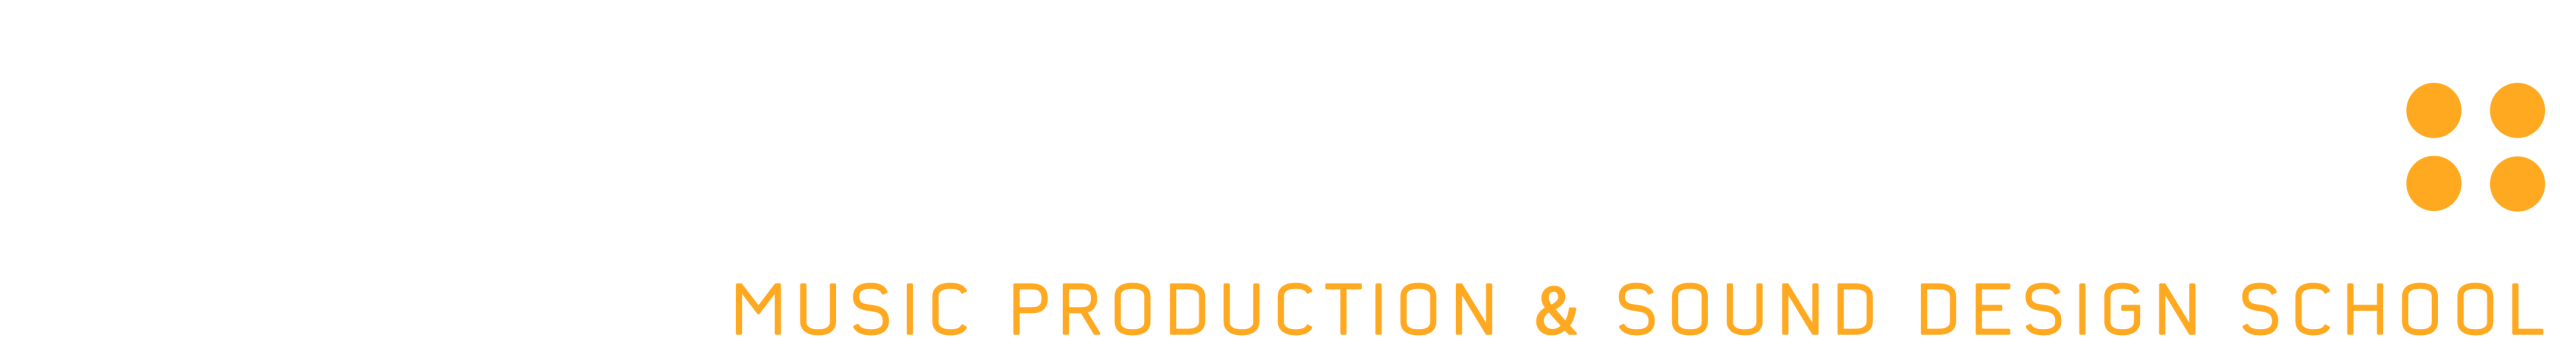 drumnote_Productions_logo_long-full_white